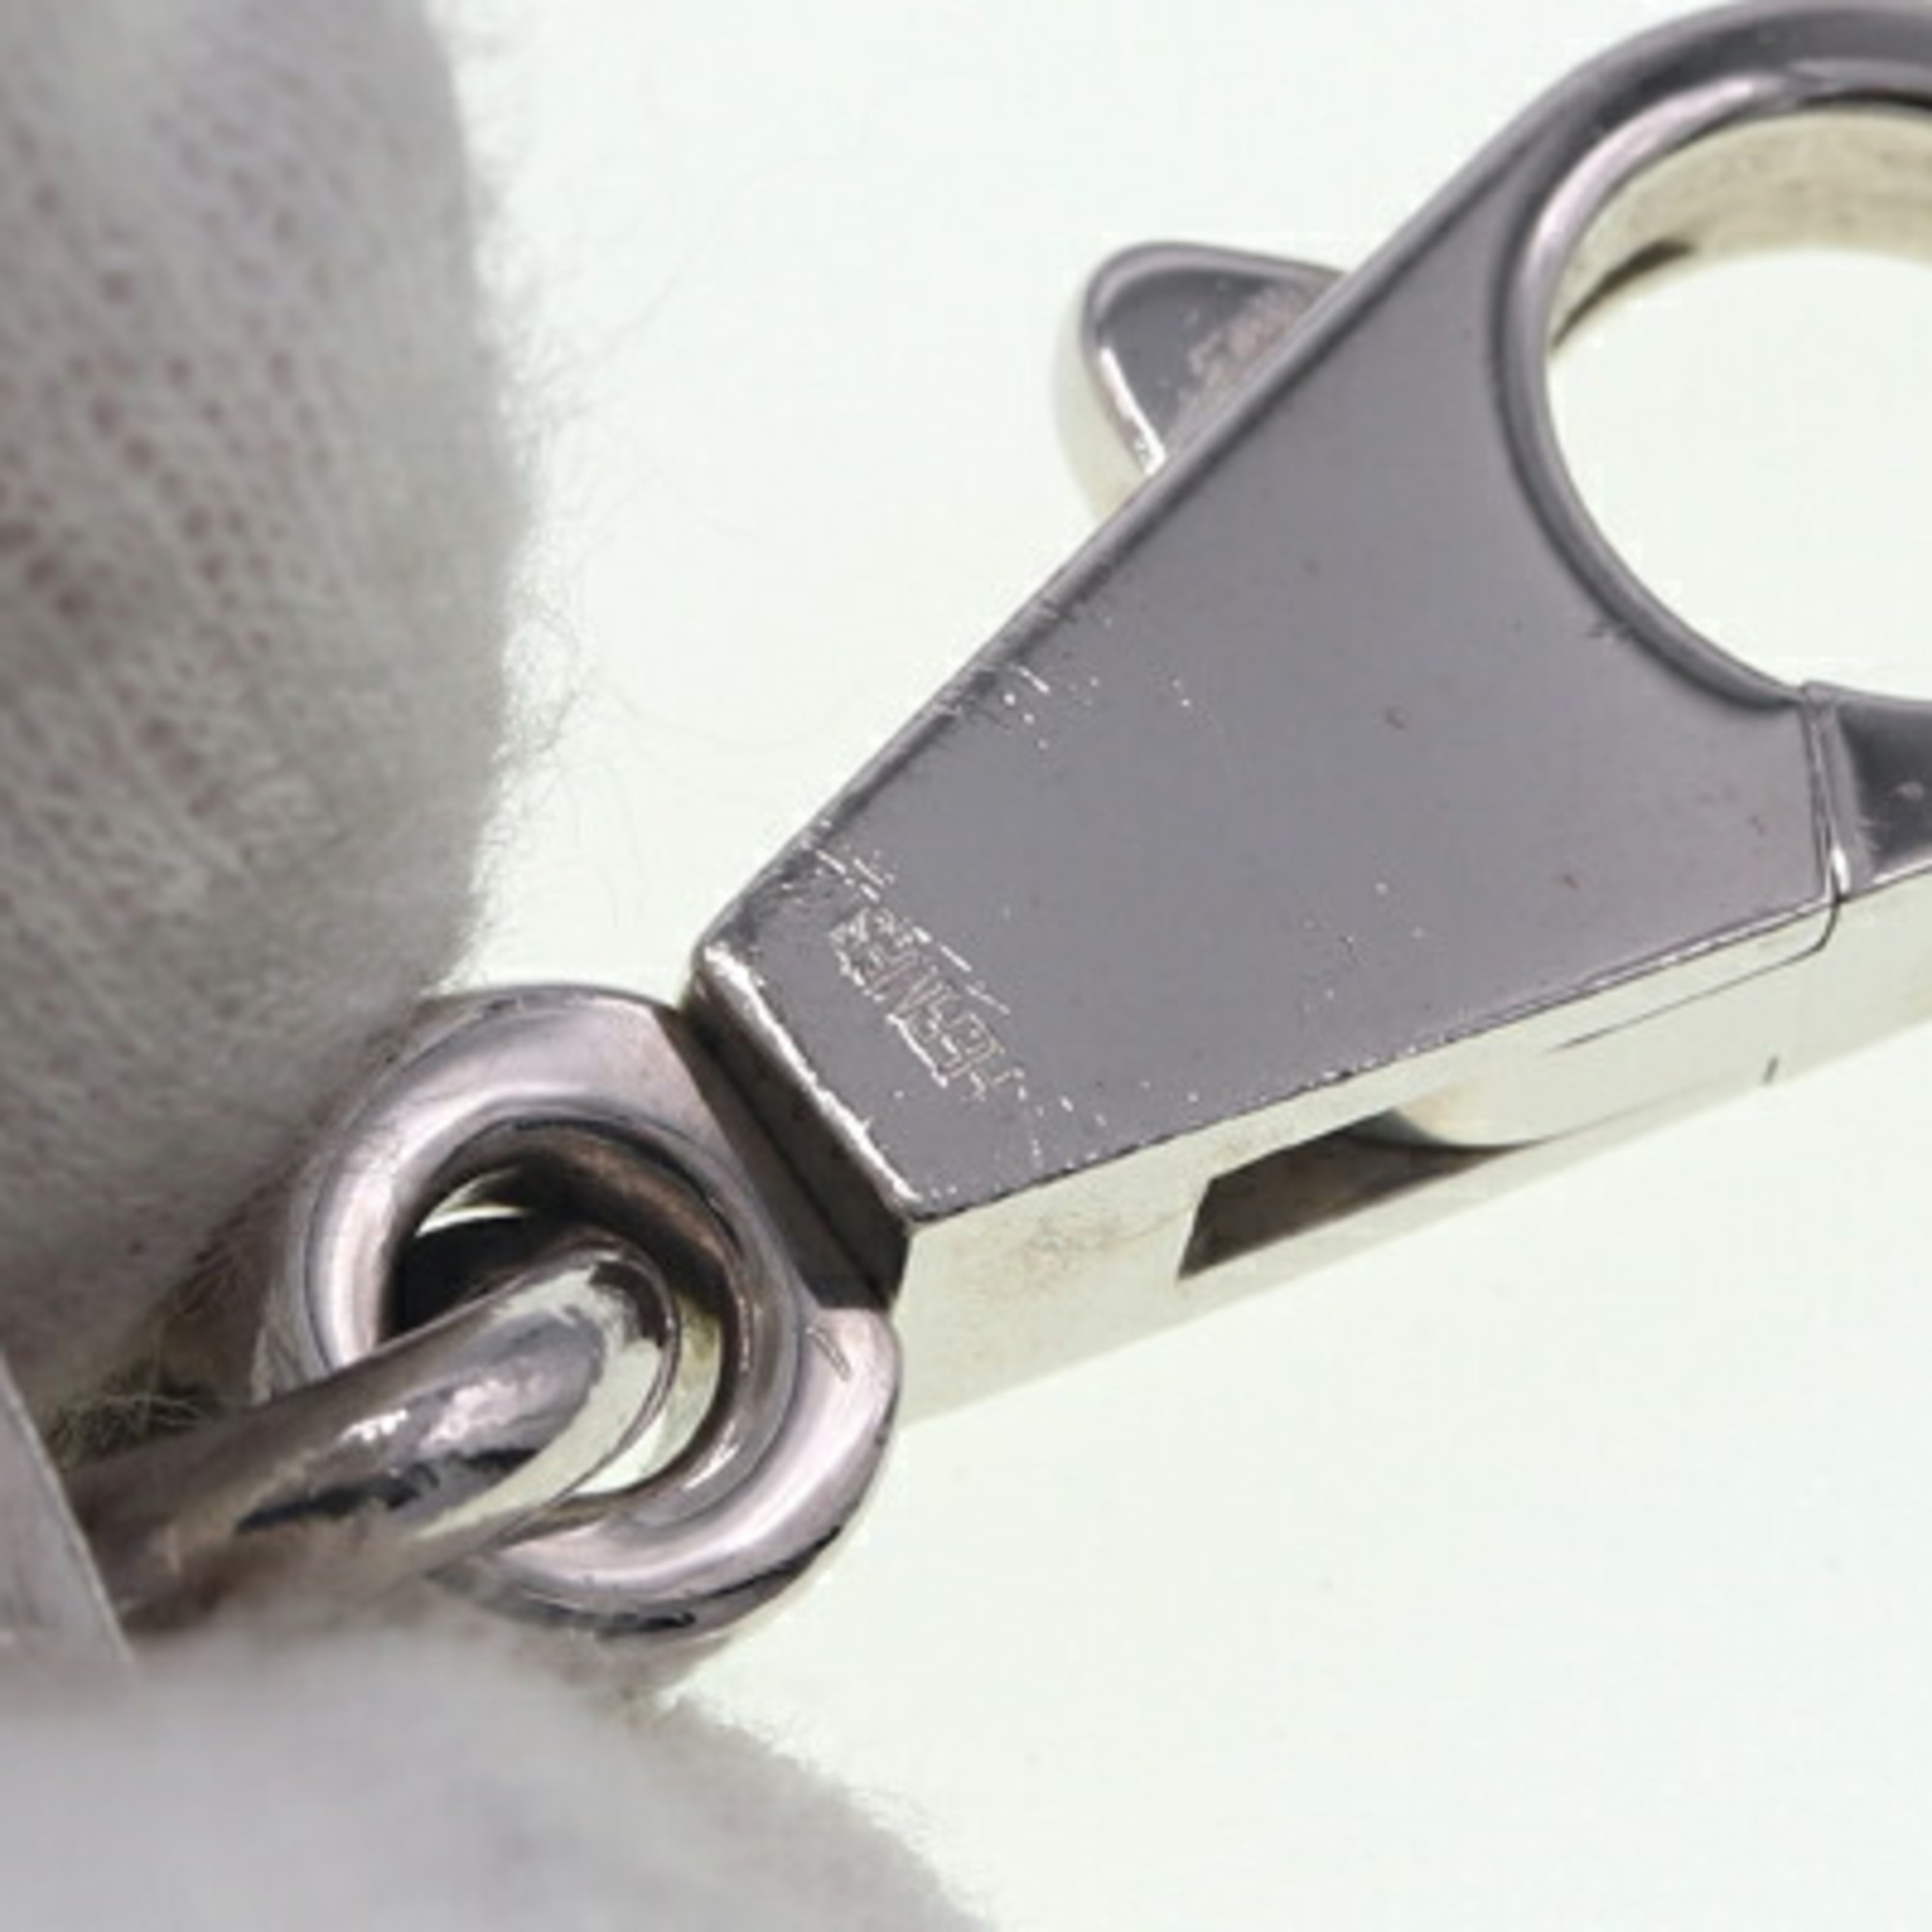 Hermes Bag Charm Silver Metal Bar Key Ring Holder Hook HERMES